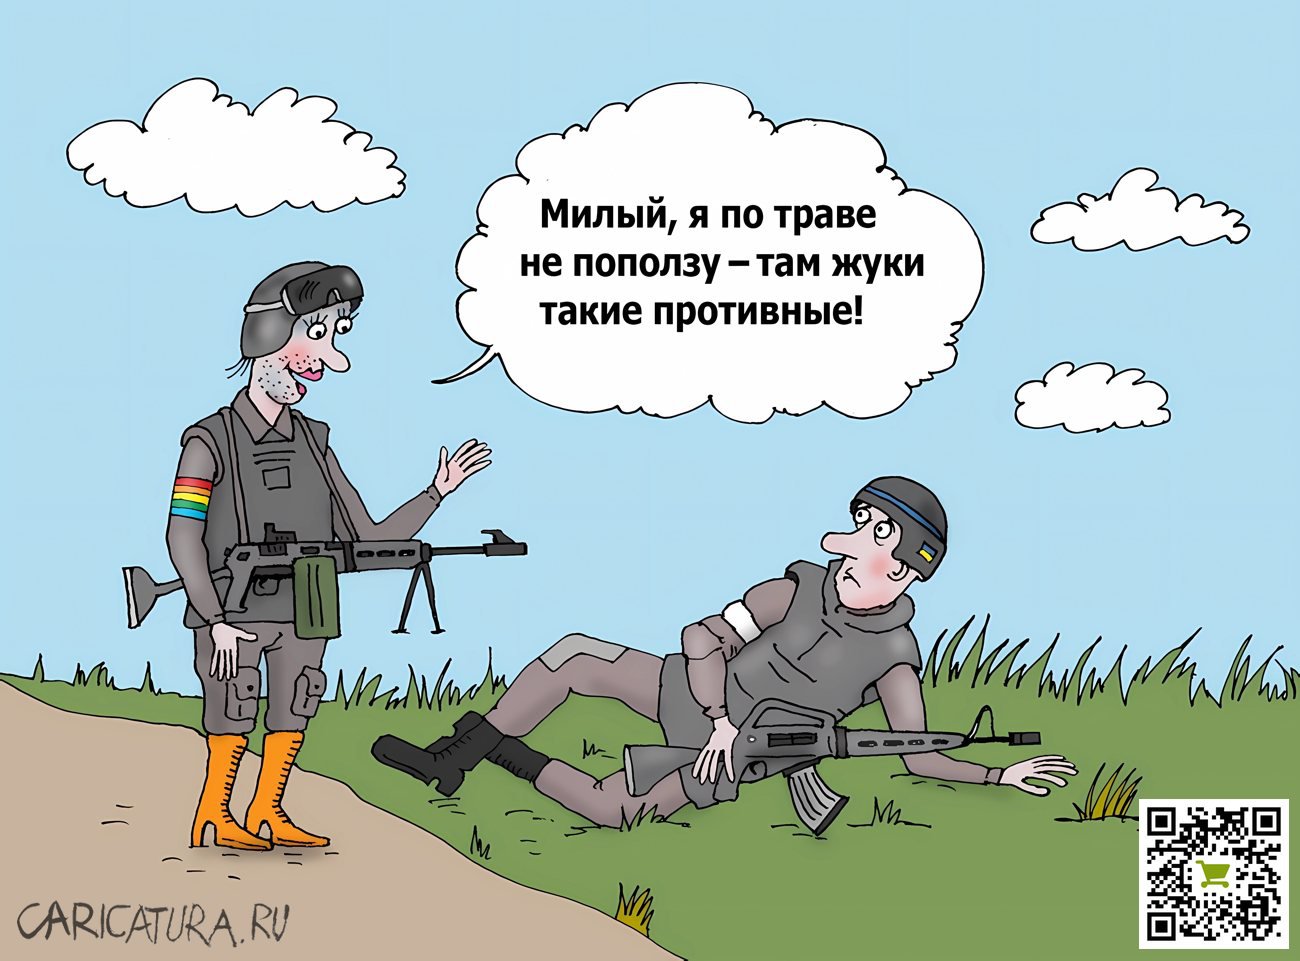 Карикатура "Сложности контрнаступа", Валерий Тарасенко